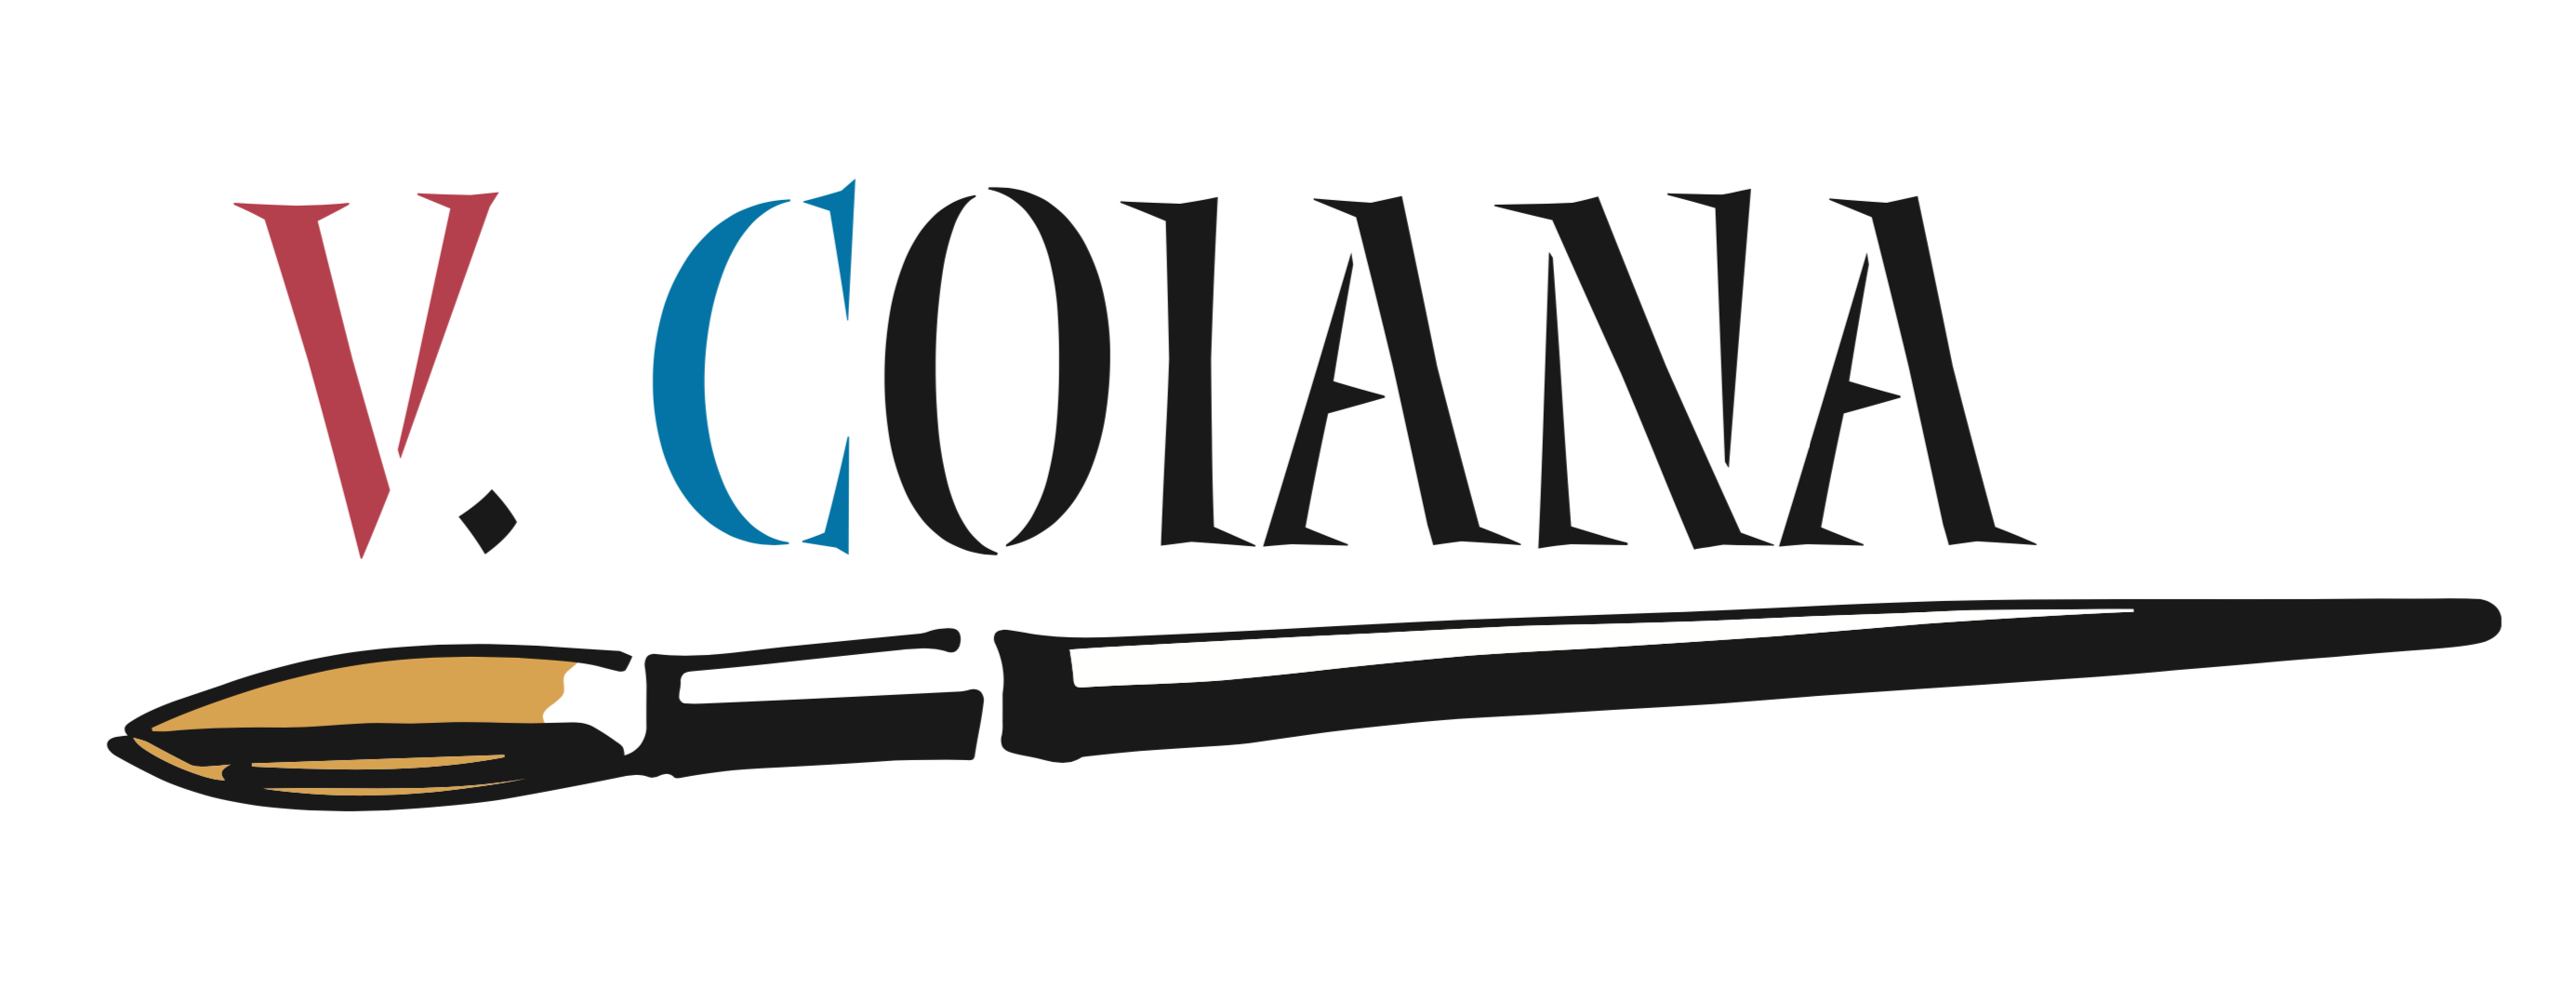 Victoria Coiana Logo